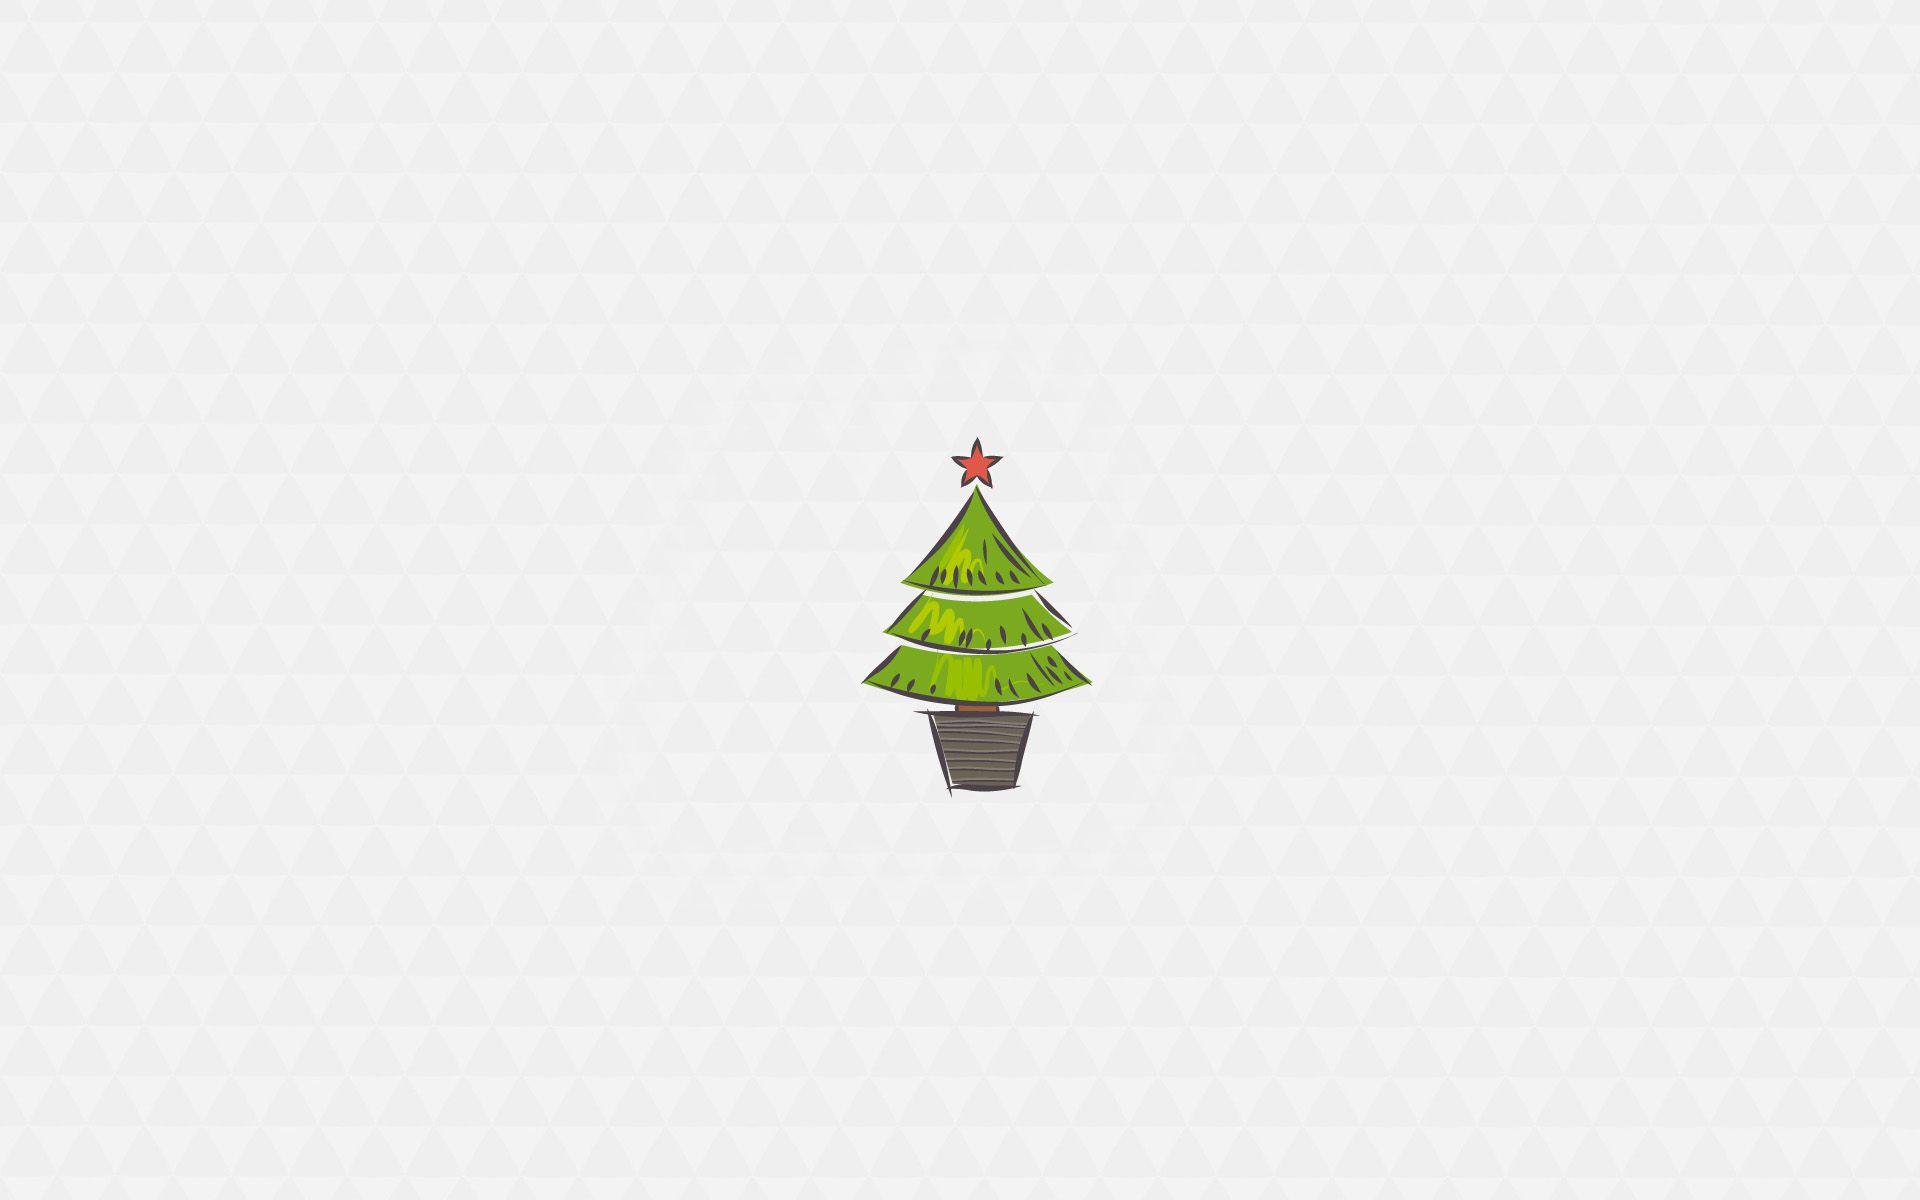 Christmas iphone wallpaper hd 4k minimalist